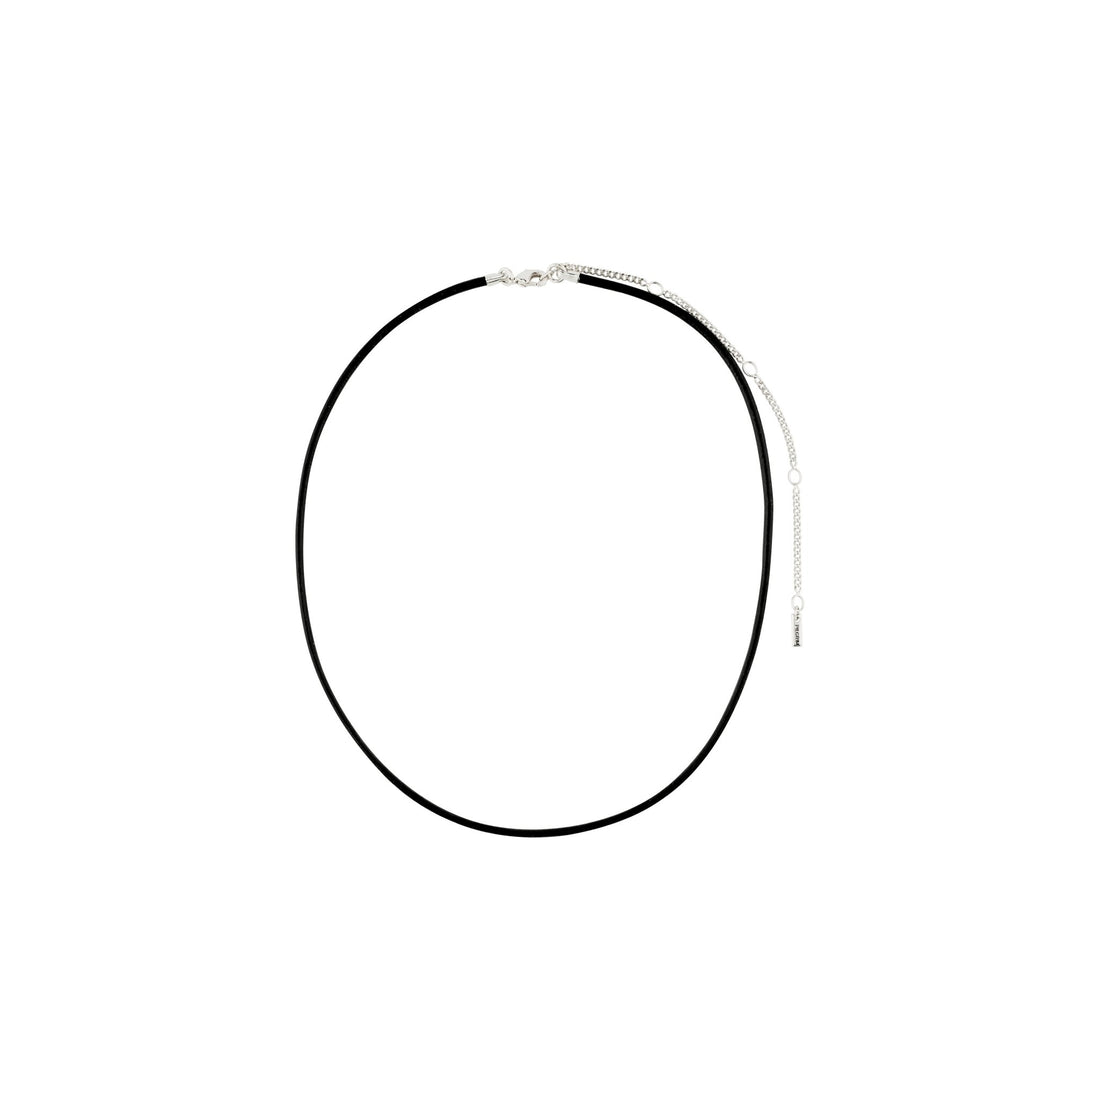 CHARM leather cord necklace - PILGRIM